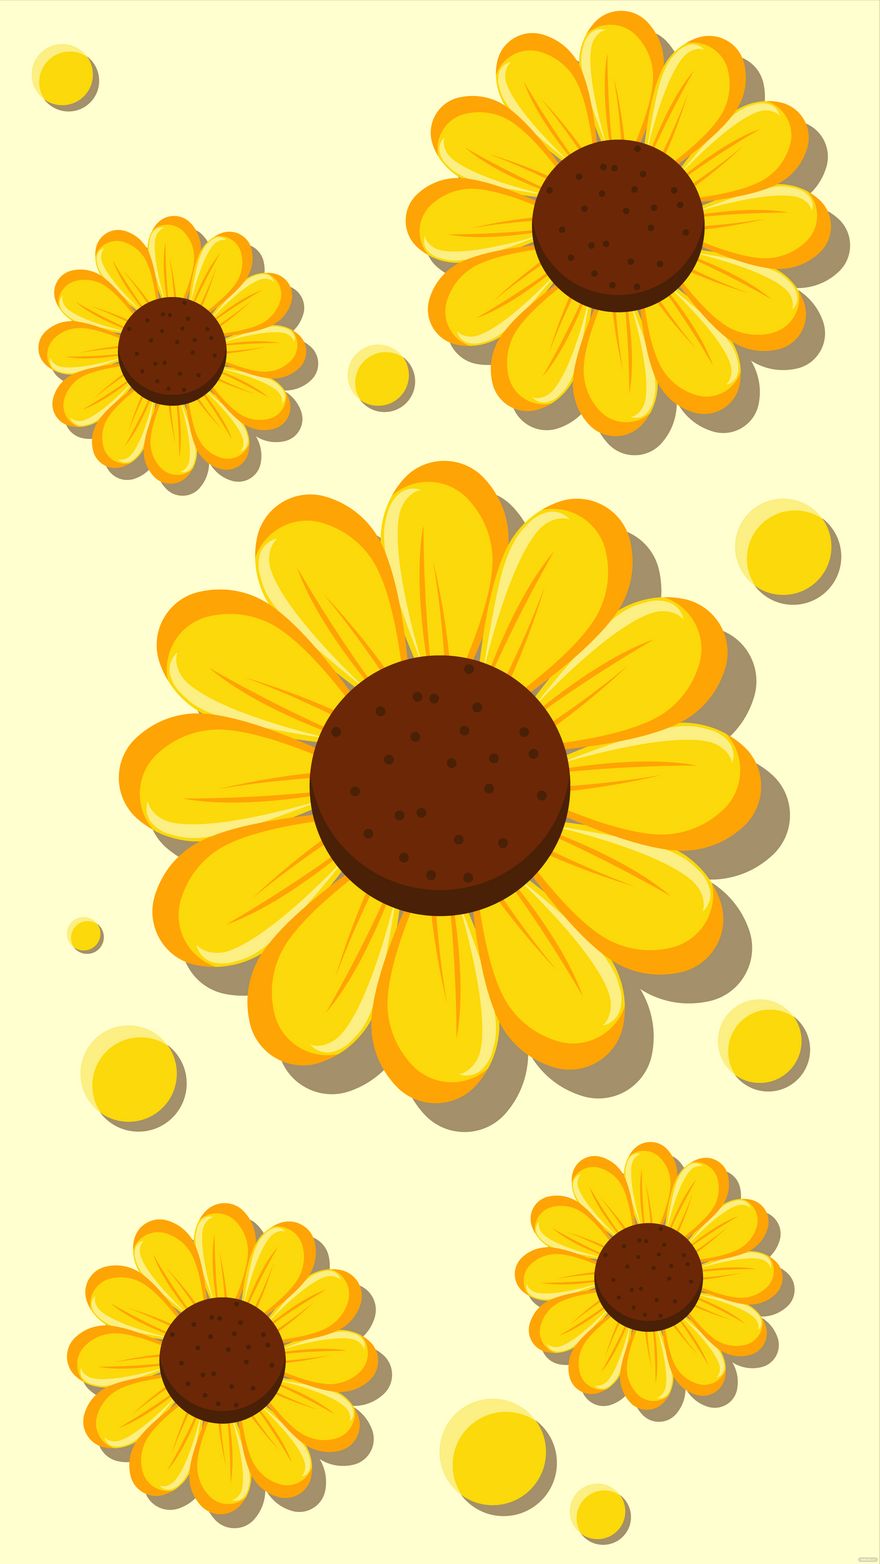 Sunflower Wallpapers - Top 30 Best Sunflower Wallpapers Download